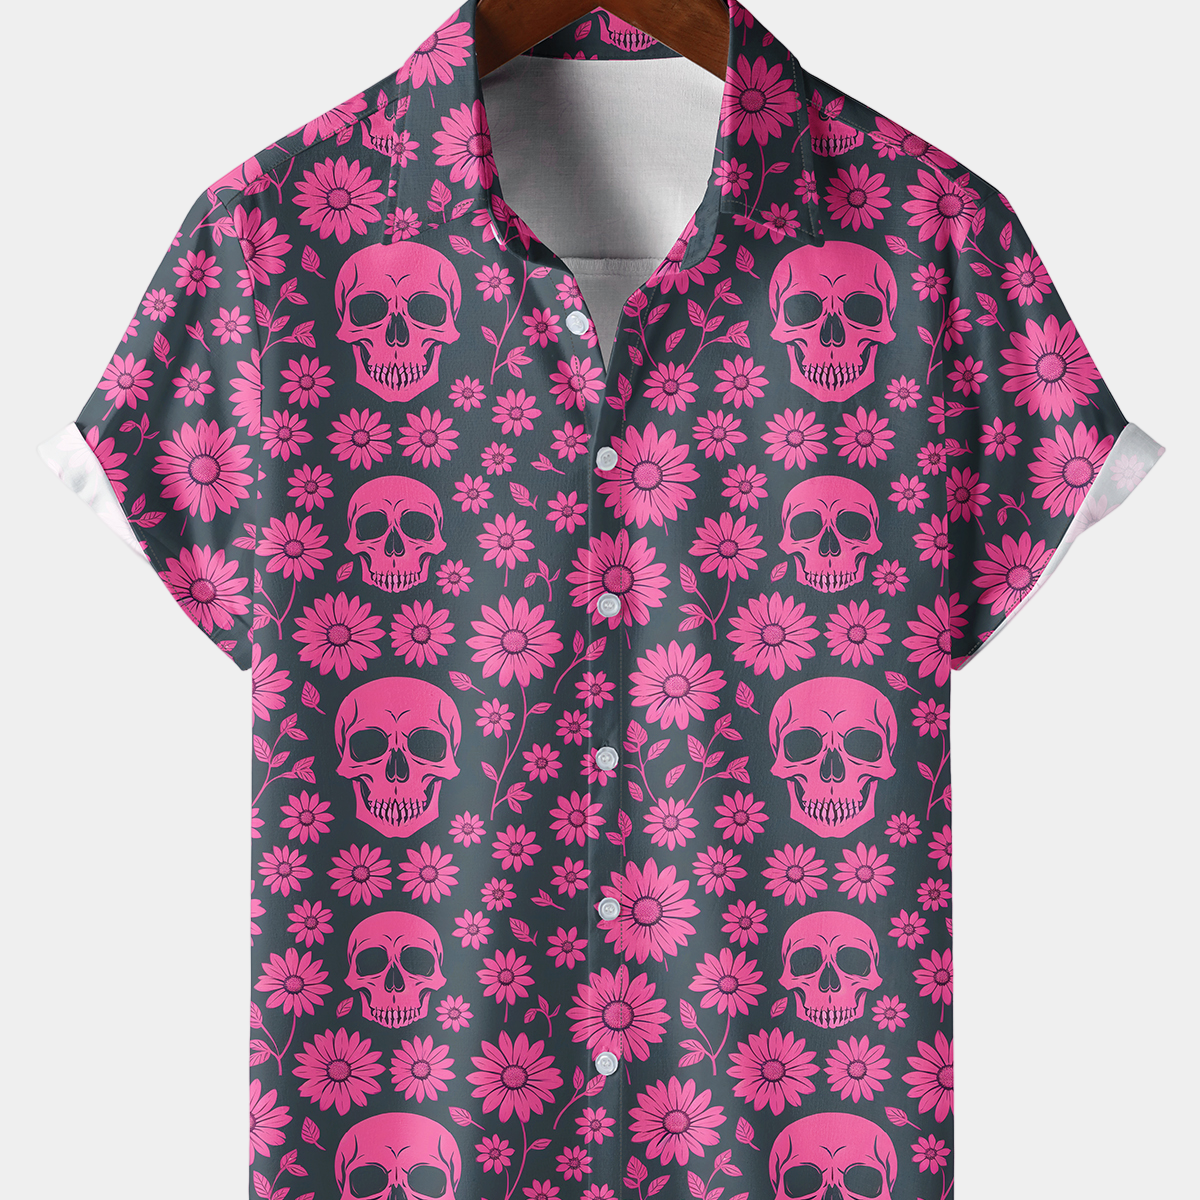 Men's Summer Pink Skull Floral Daisy Print Button Up Holiday Short Sleeve Shirt